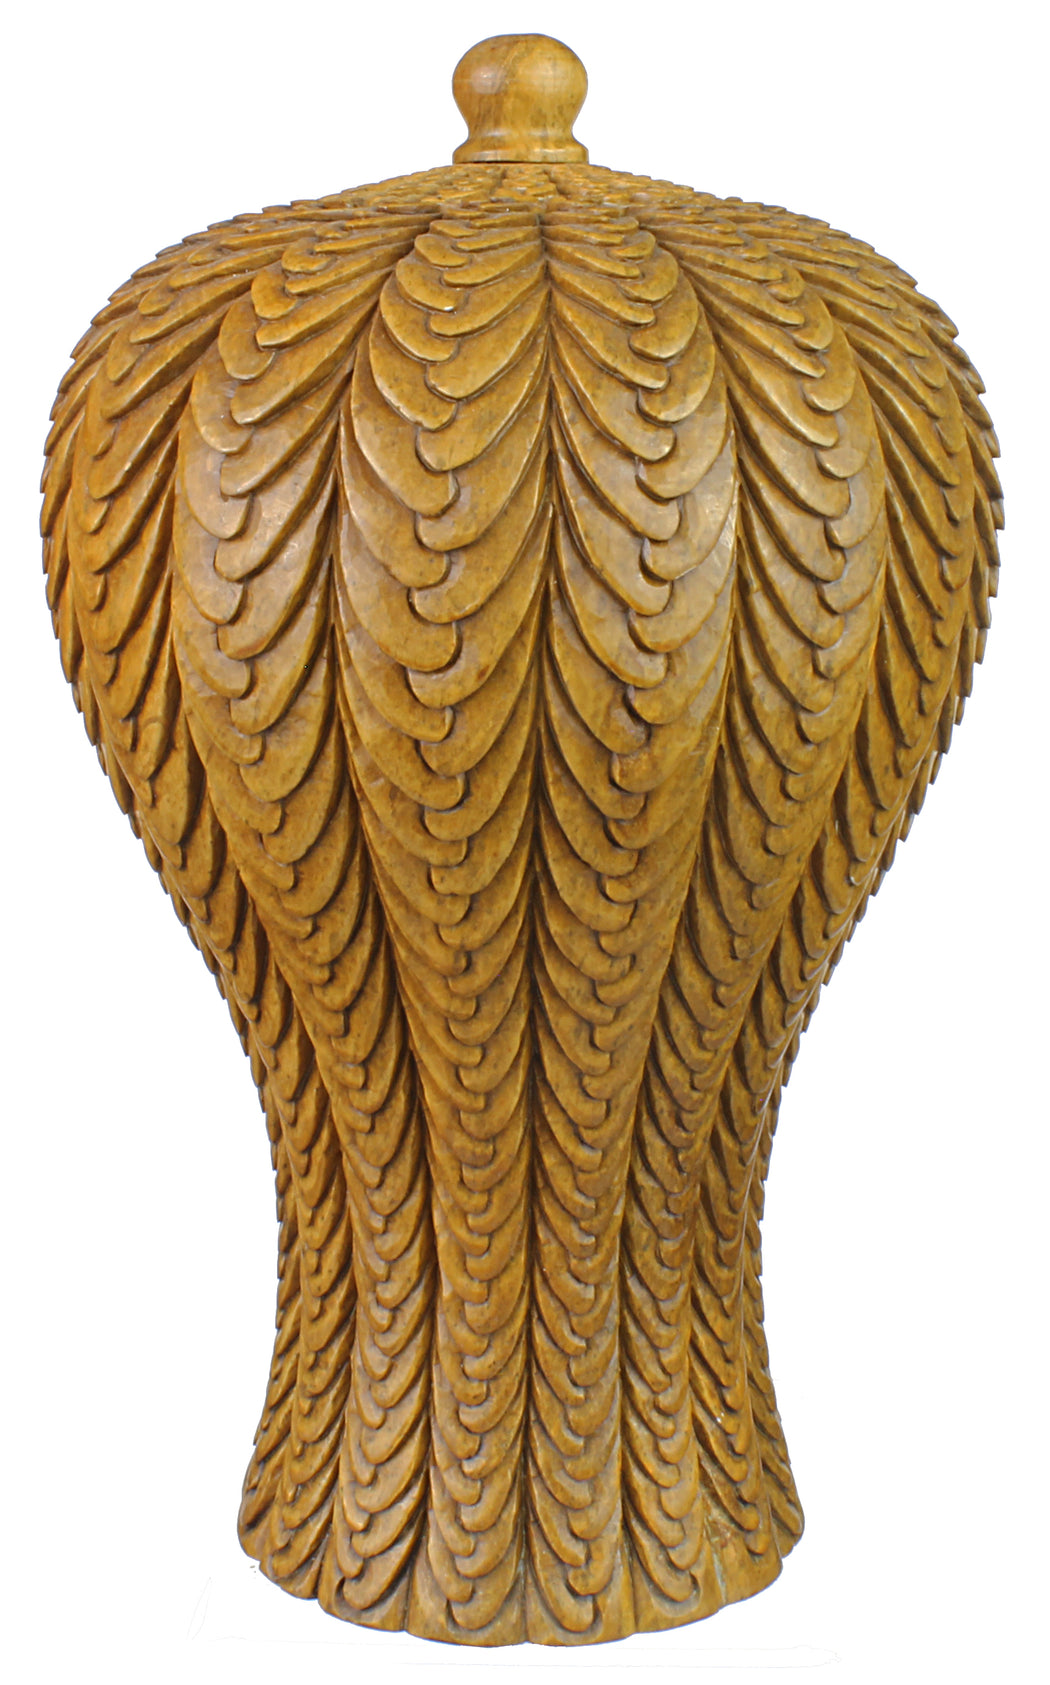 Braided Weave Niger Bend Soapstone Trinket Decor Urn/Jar with Lid - Niger Bend